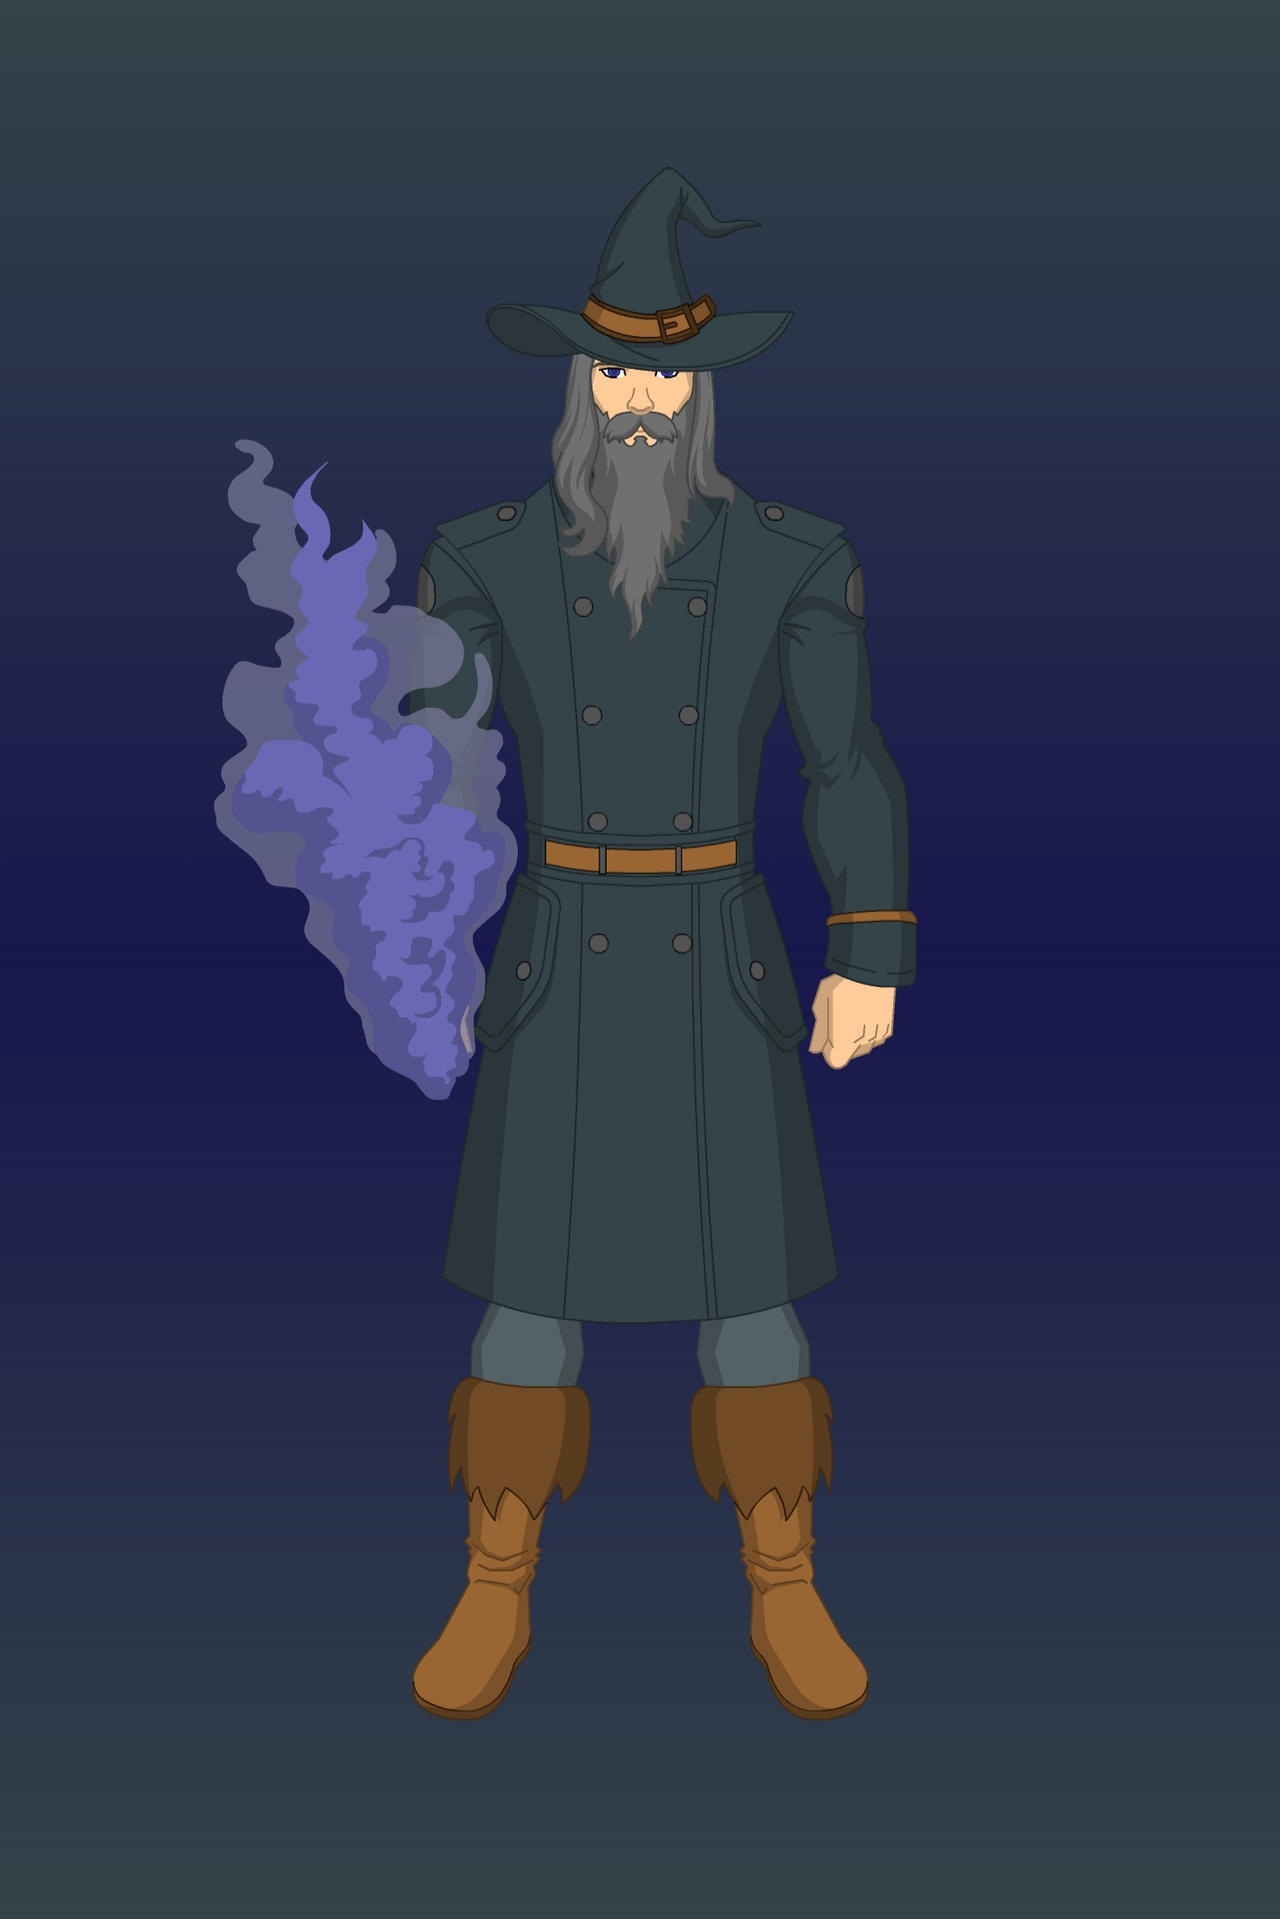 Merlin The Wizard by Mr-Boyd on DeviantArt